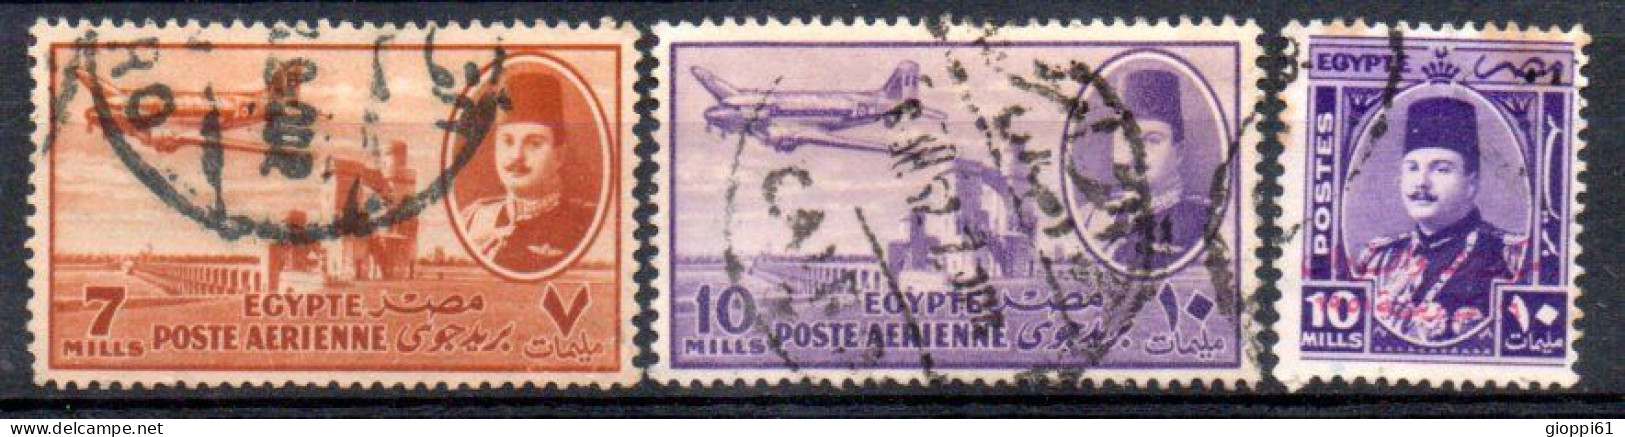 1952 Egitto - Posta Aerea + Commemorativo - Usati